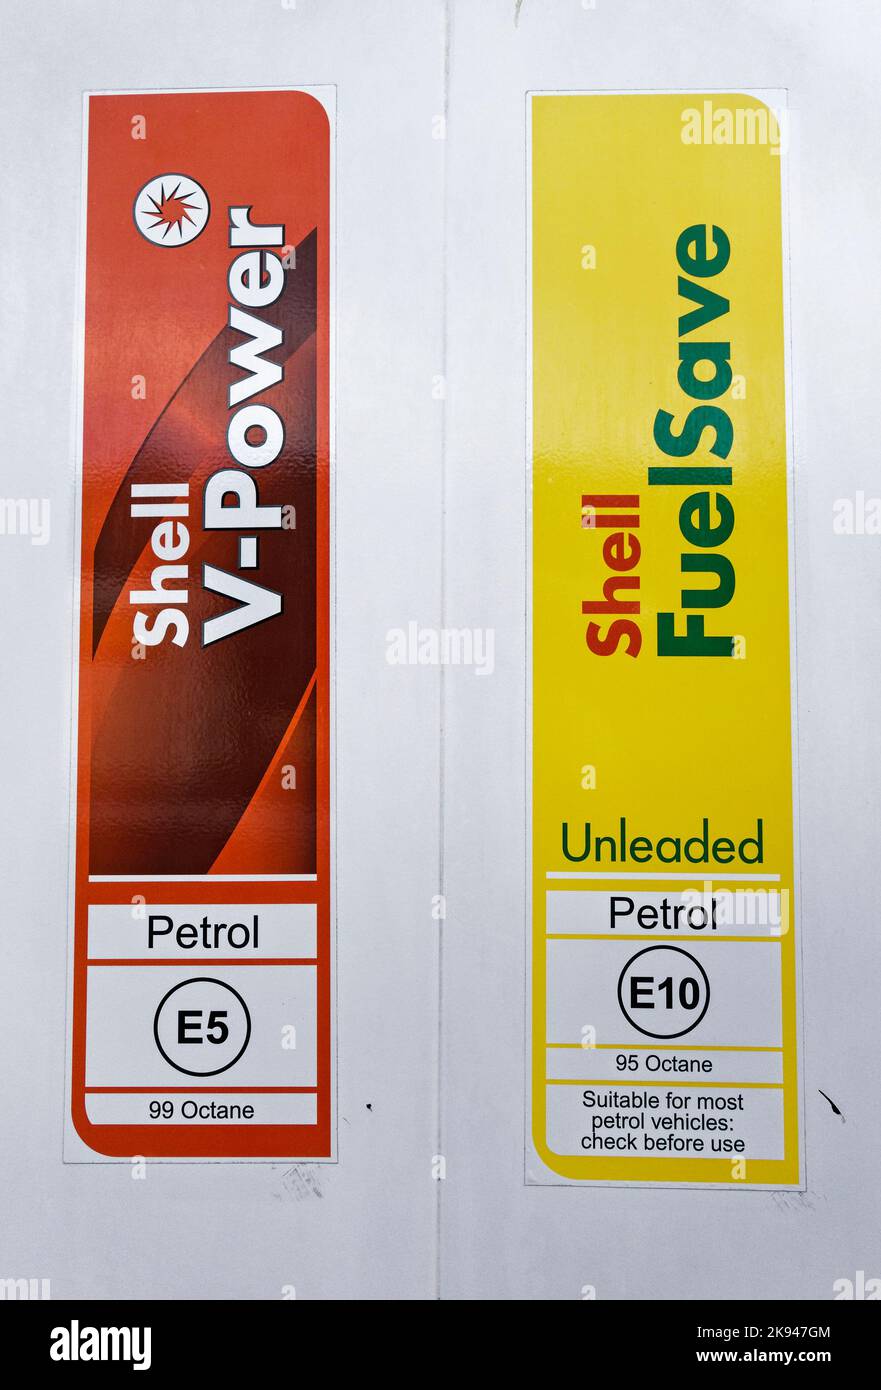 Shell petrol pumps serving E5 and E10 petrol. Stock Photo